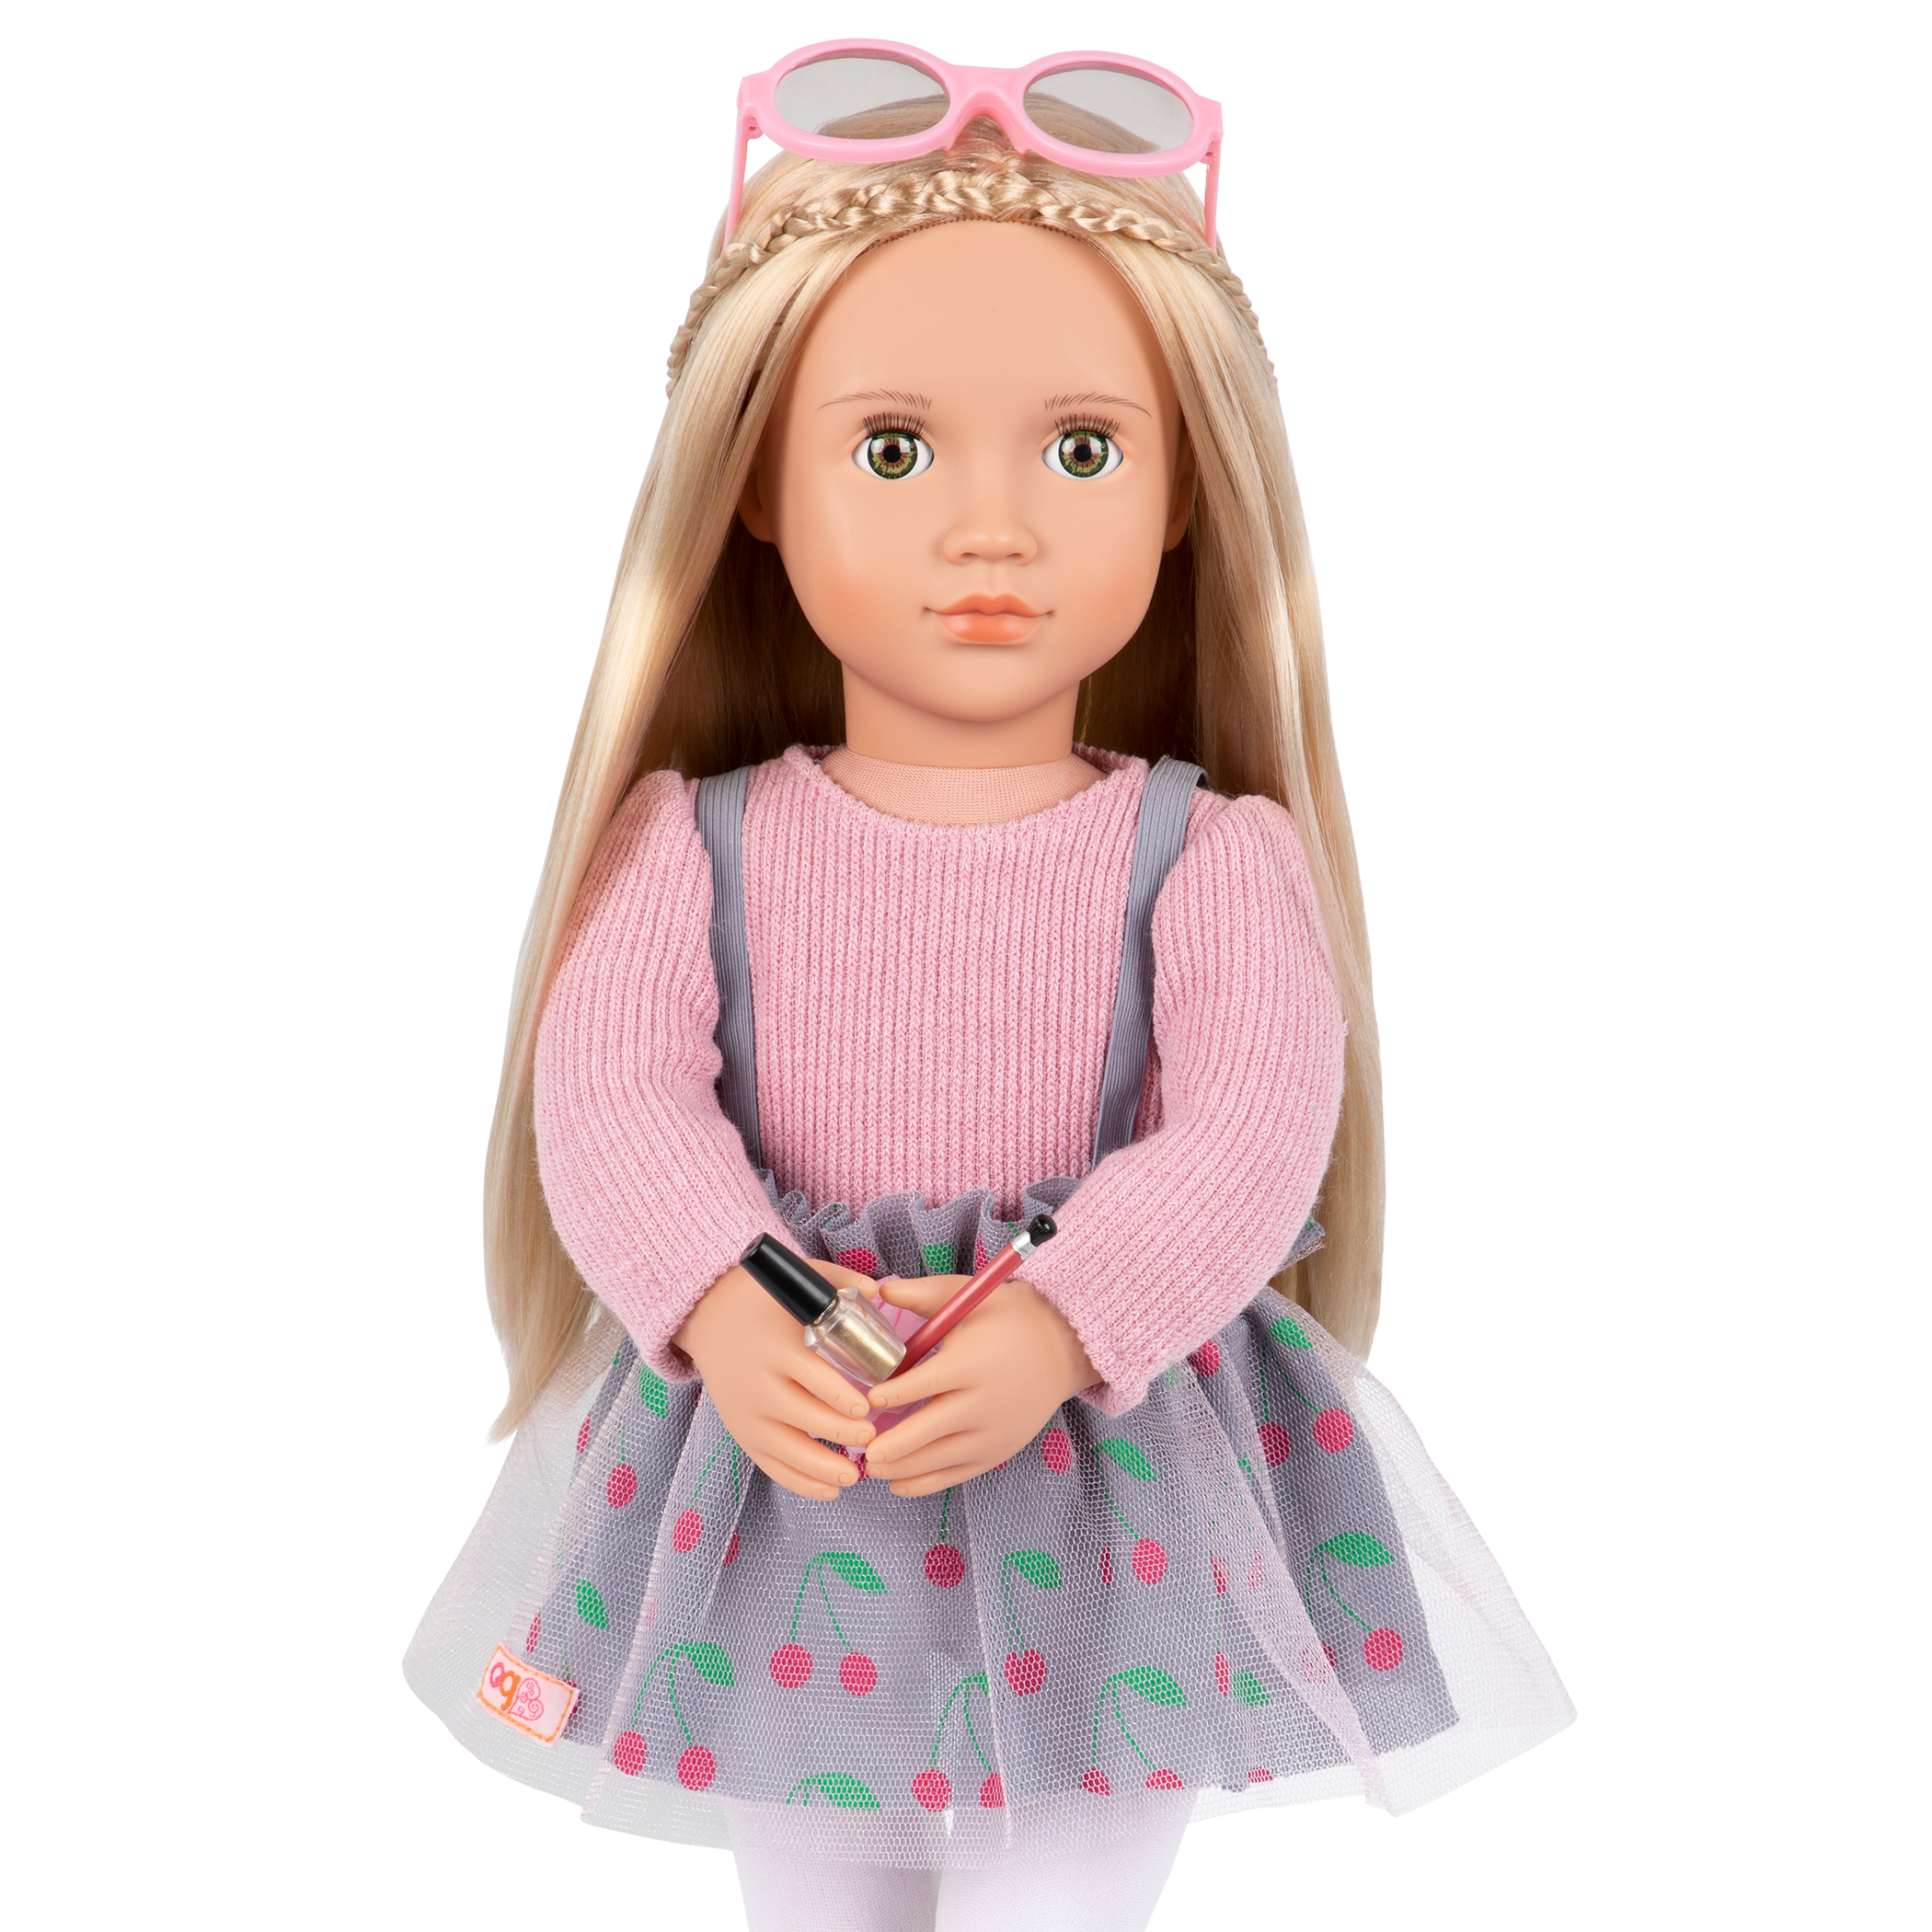 18-inch doll with purse fashion playset